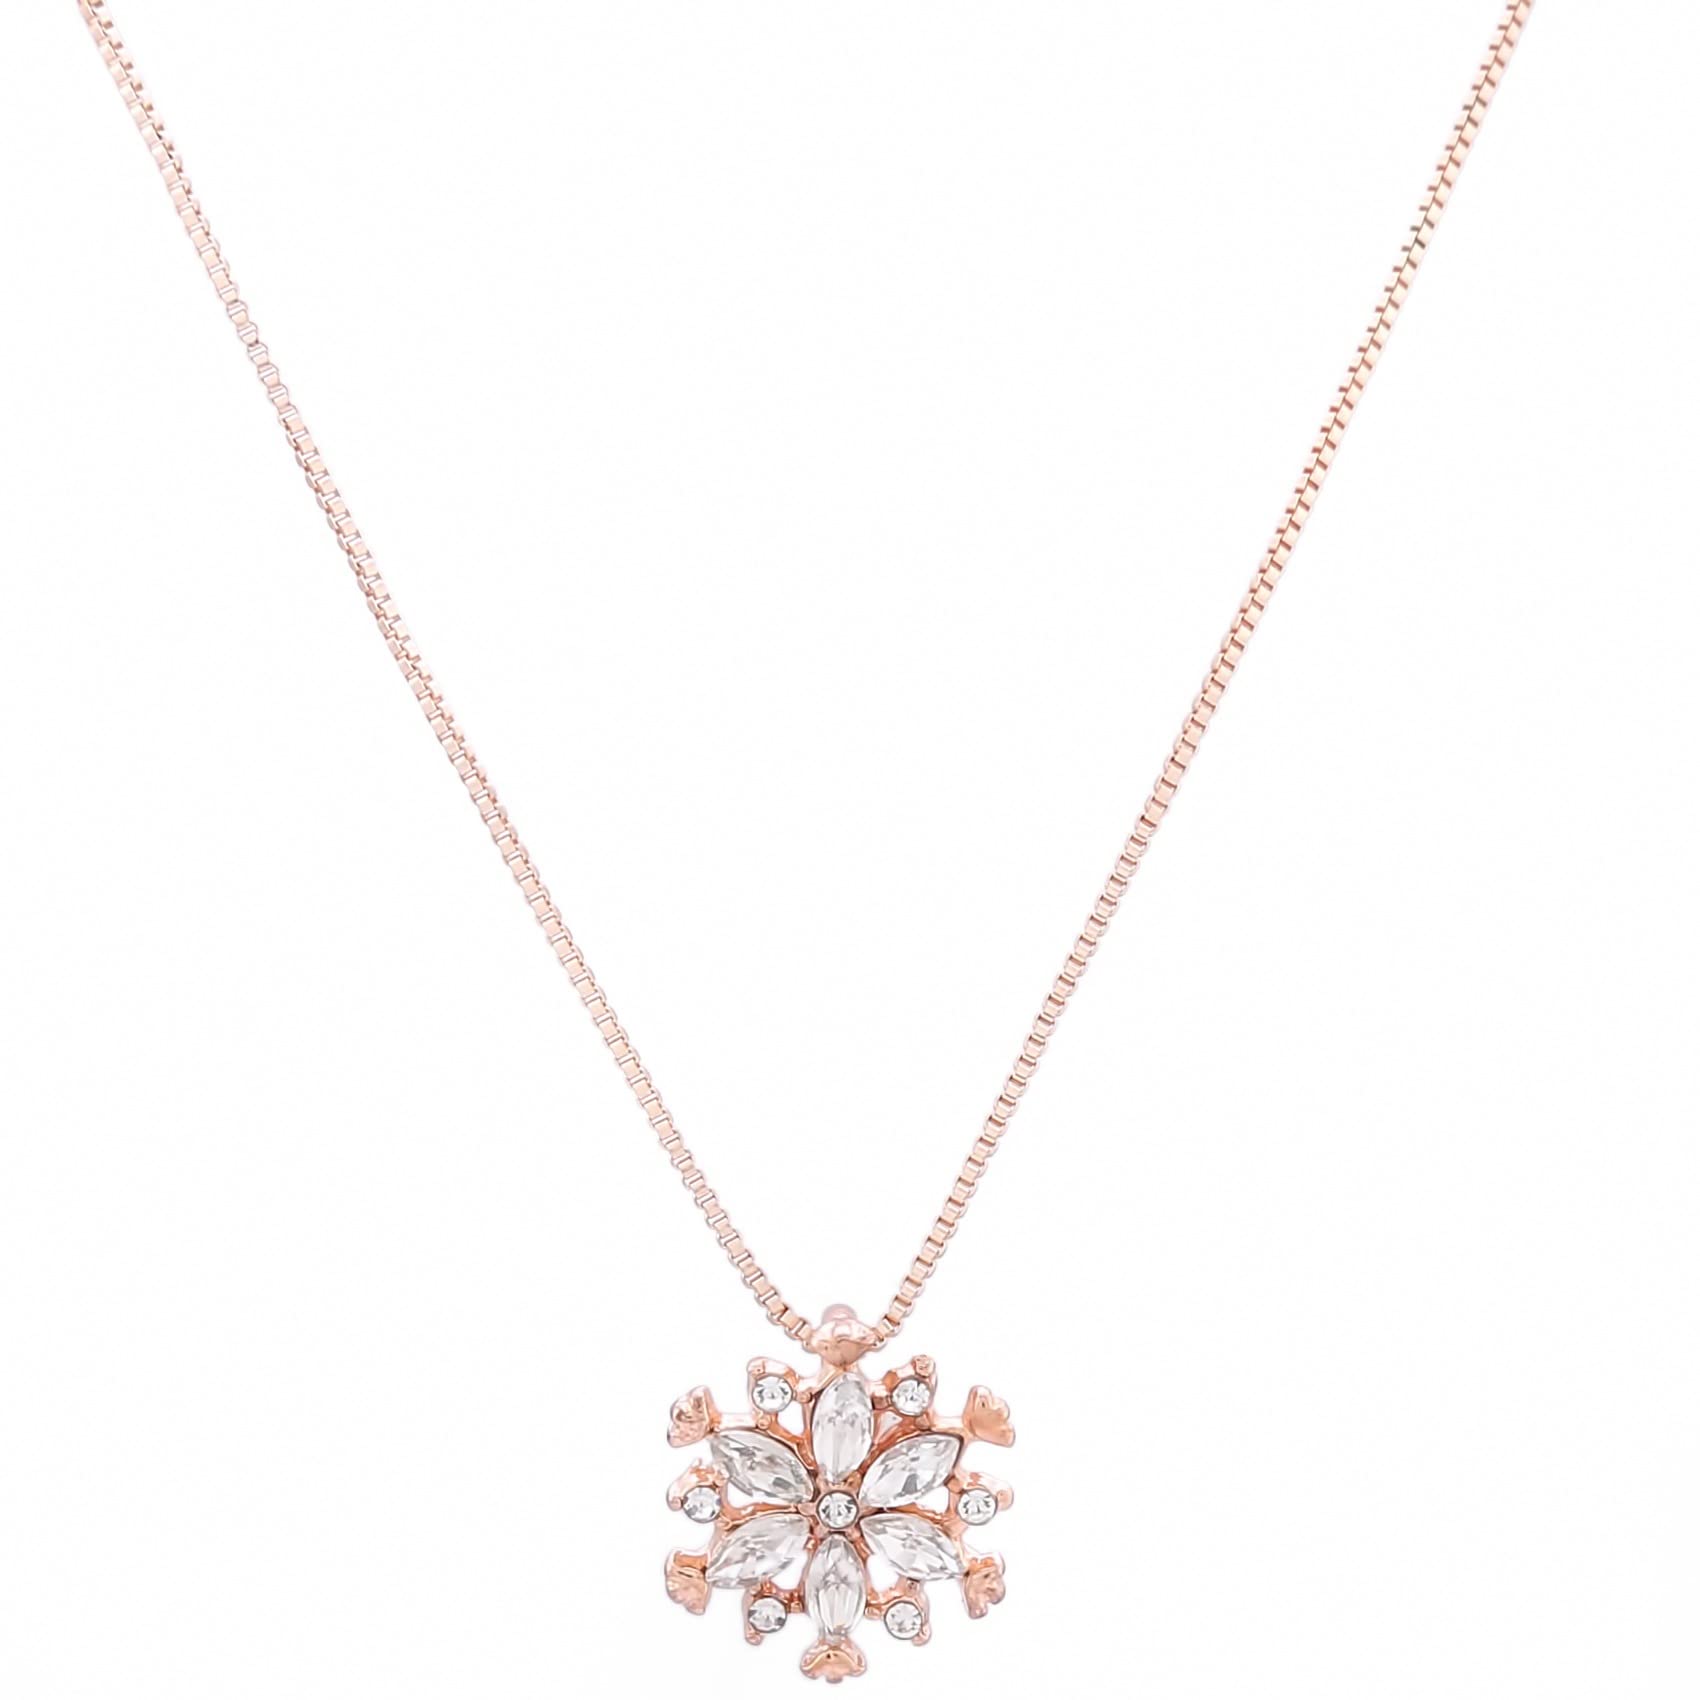 Iumer Snowflake Necklace Women Pendant Inlaid Rhinestone Clavicle Chain